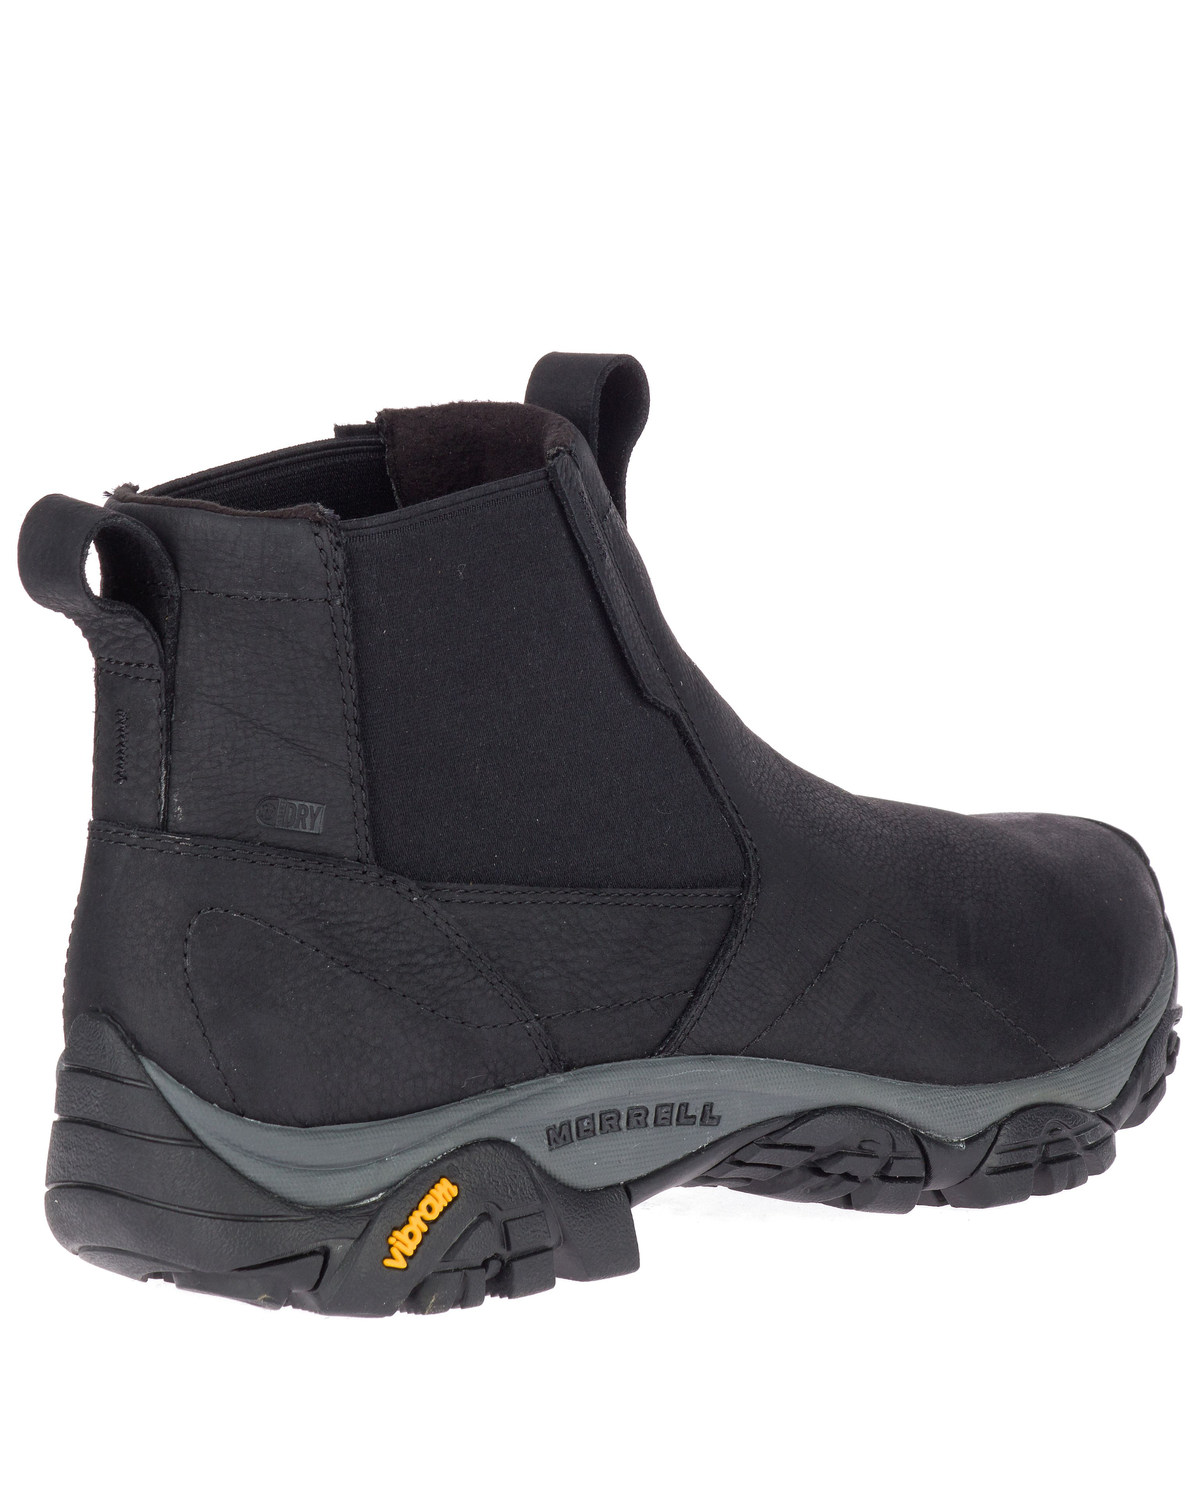 Merrell Men's MOAB Adventure Waterproof Hiking Boots - Soft Toe | Boot Barn